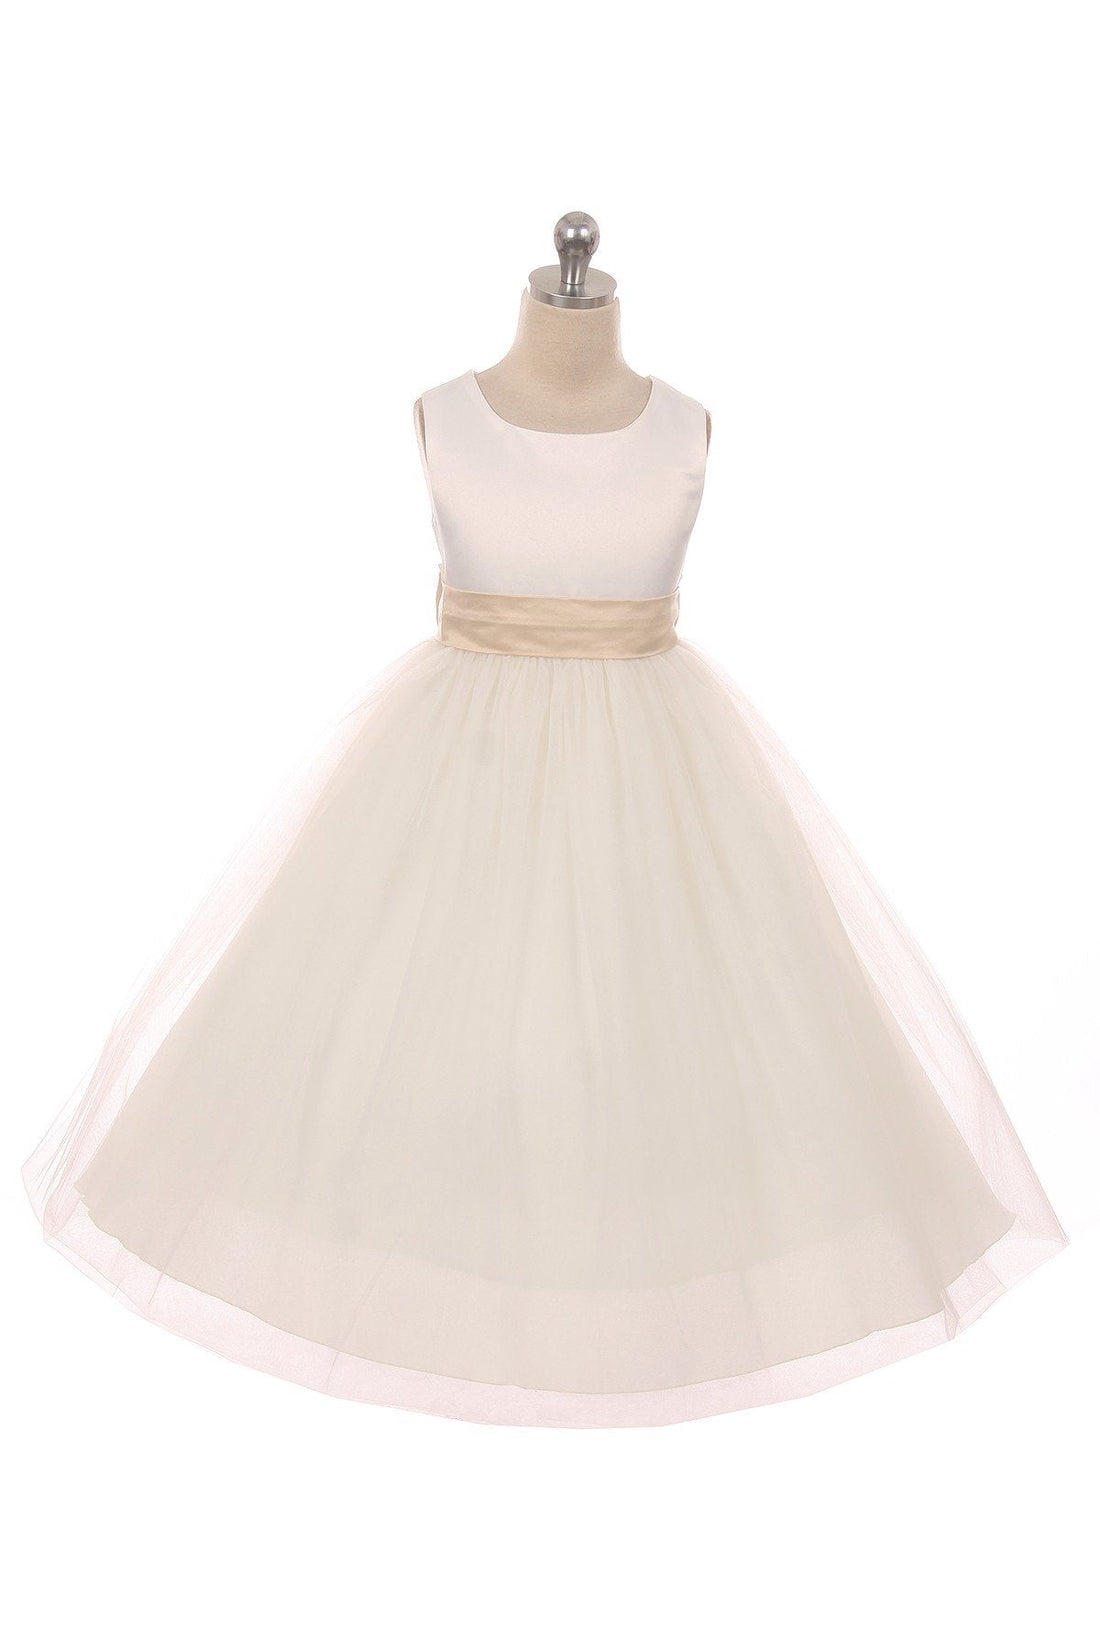 Champagne Girl Dress - Ivory Satin Sash Bow Girl Dress - AS411 Kids Dream